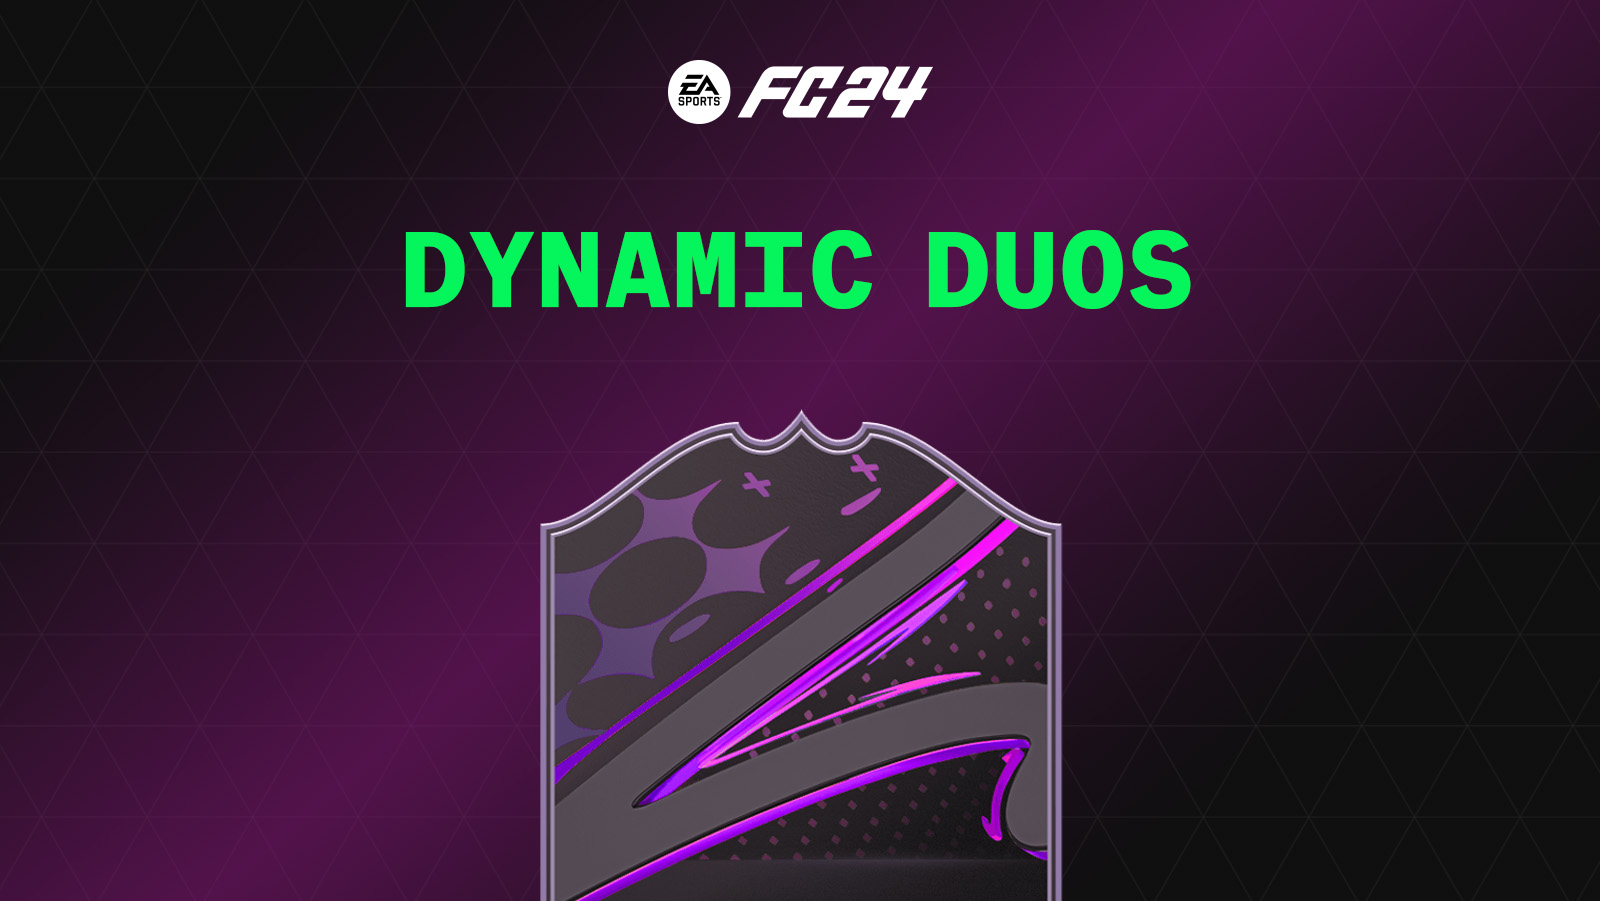 FC 24 Dynamic Duo